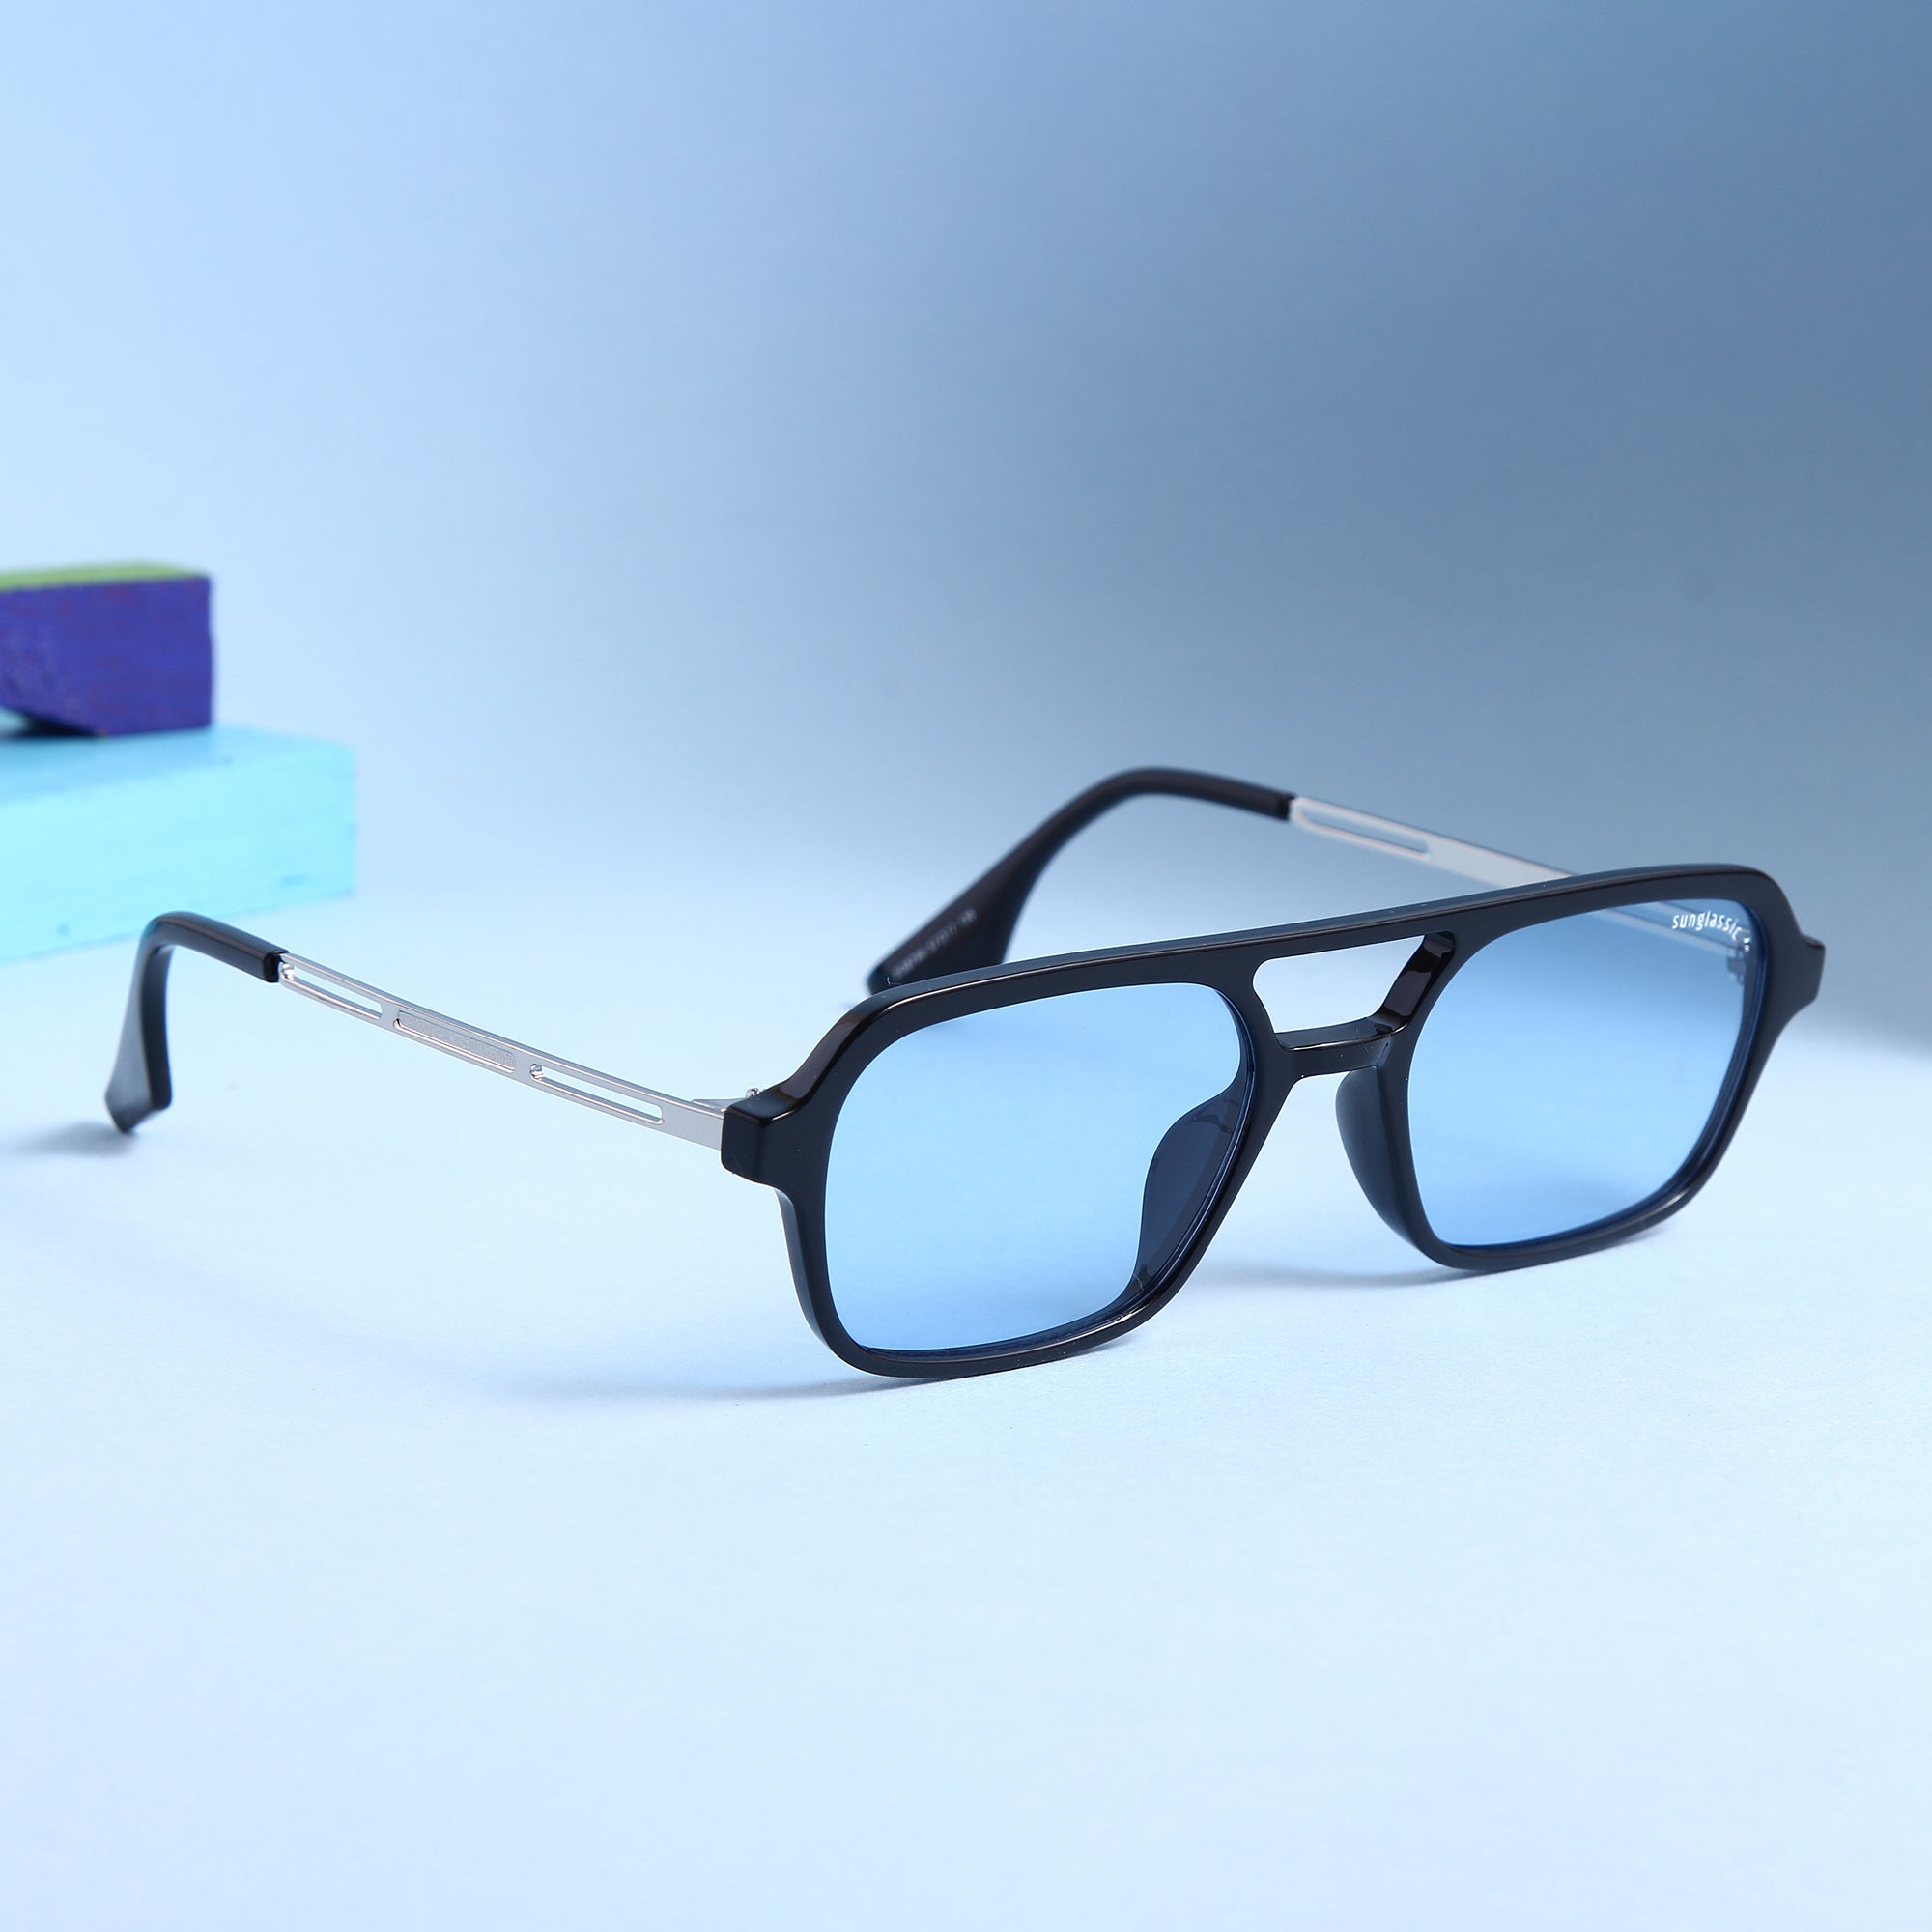 COLTON. Black Blue Rectangle Sunglasses